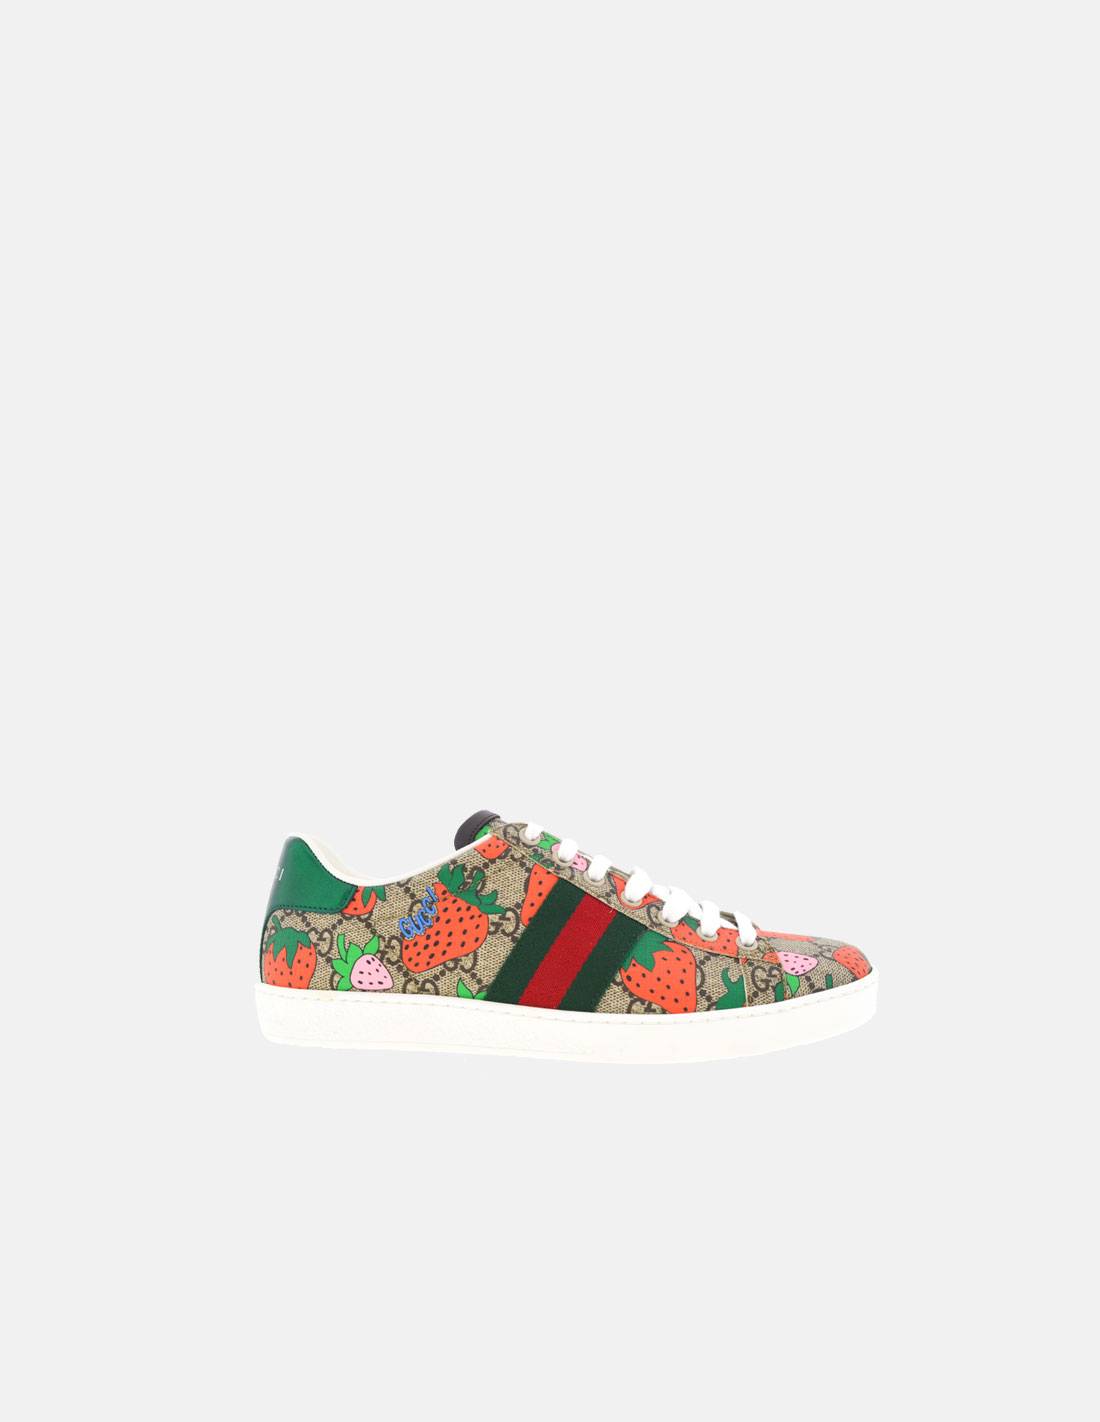 Gucci Ace GG Strawberry Sneakers | EB